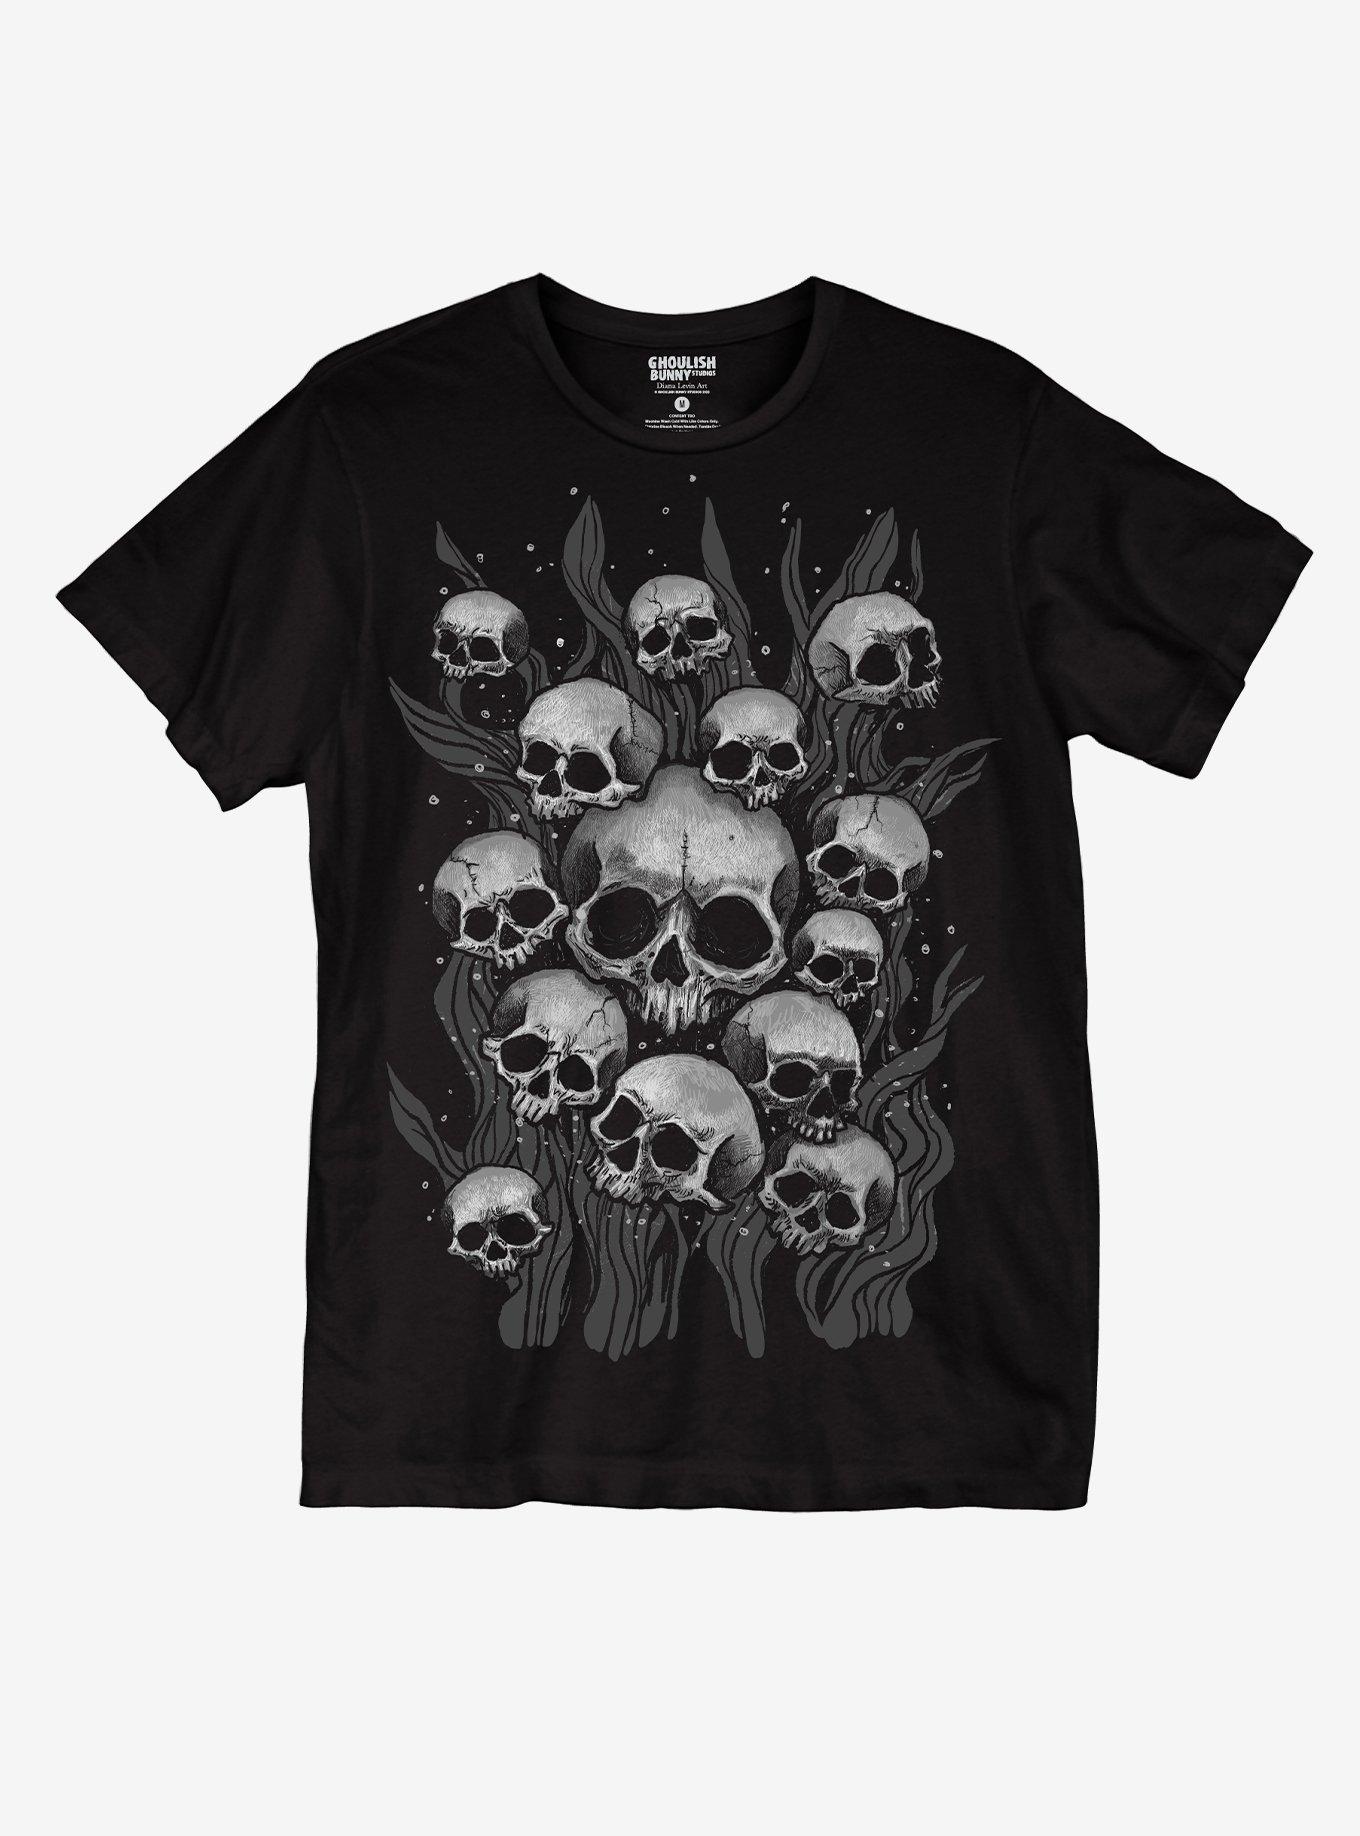 Skulls Sinking Boyfriend Fit Girls T-Shirt By Ghoulish Bunny | Hot Topic